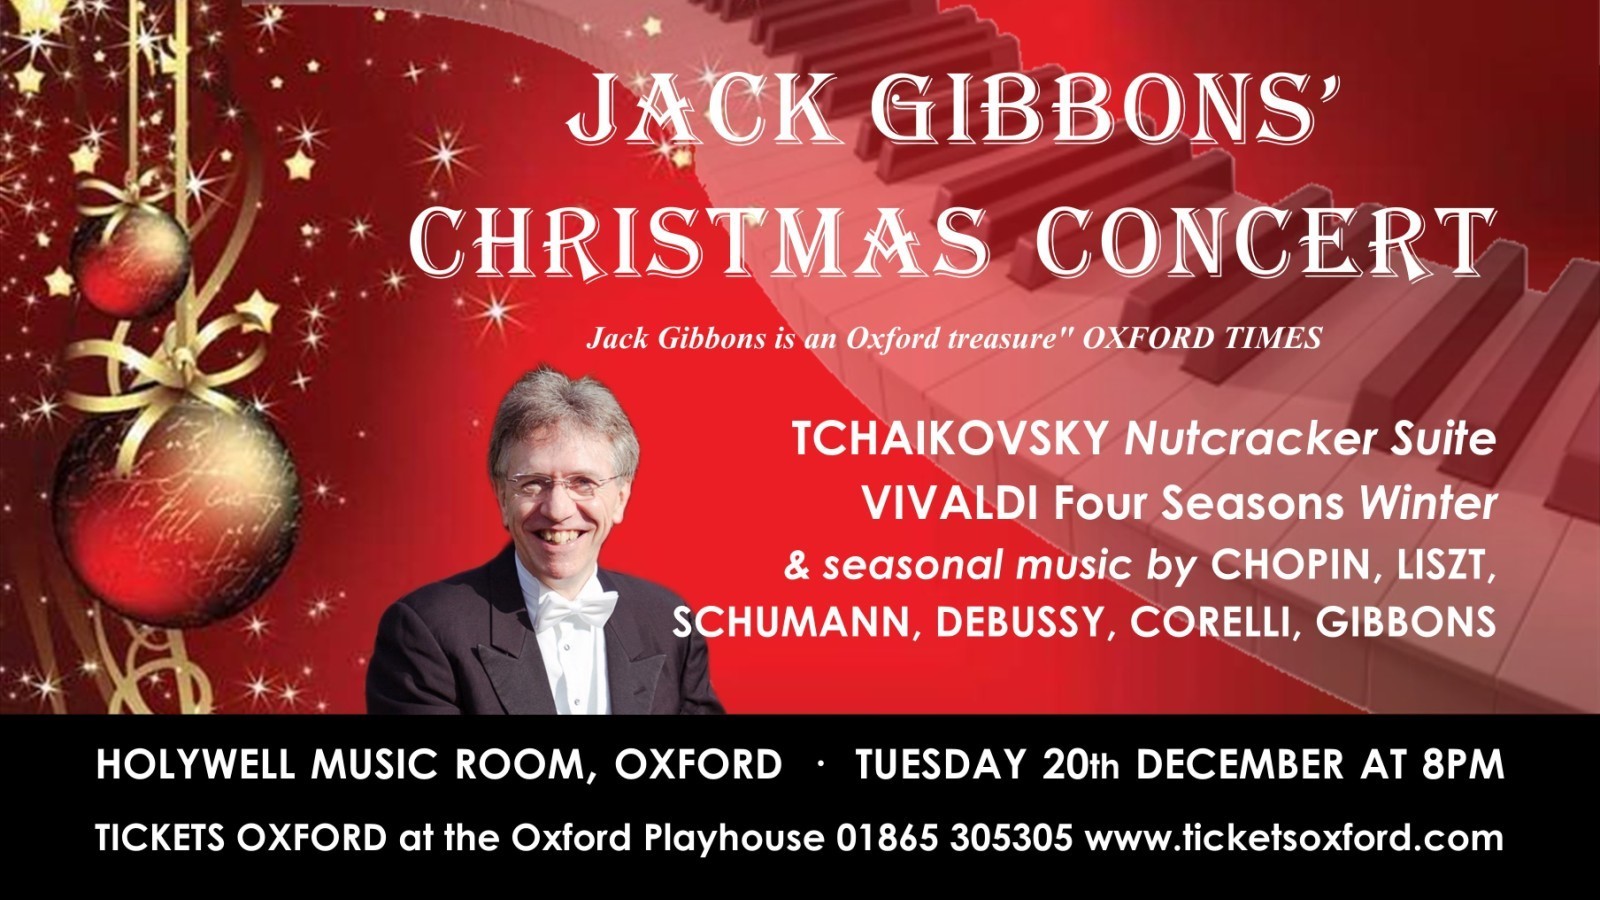 Jack Gibbons' Christmas Concert, Oxford, England, United Kingdom